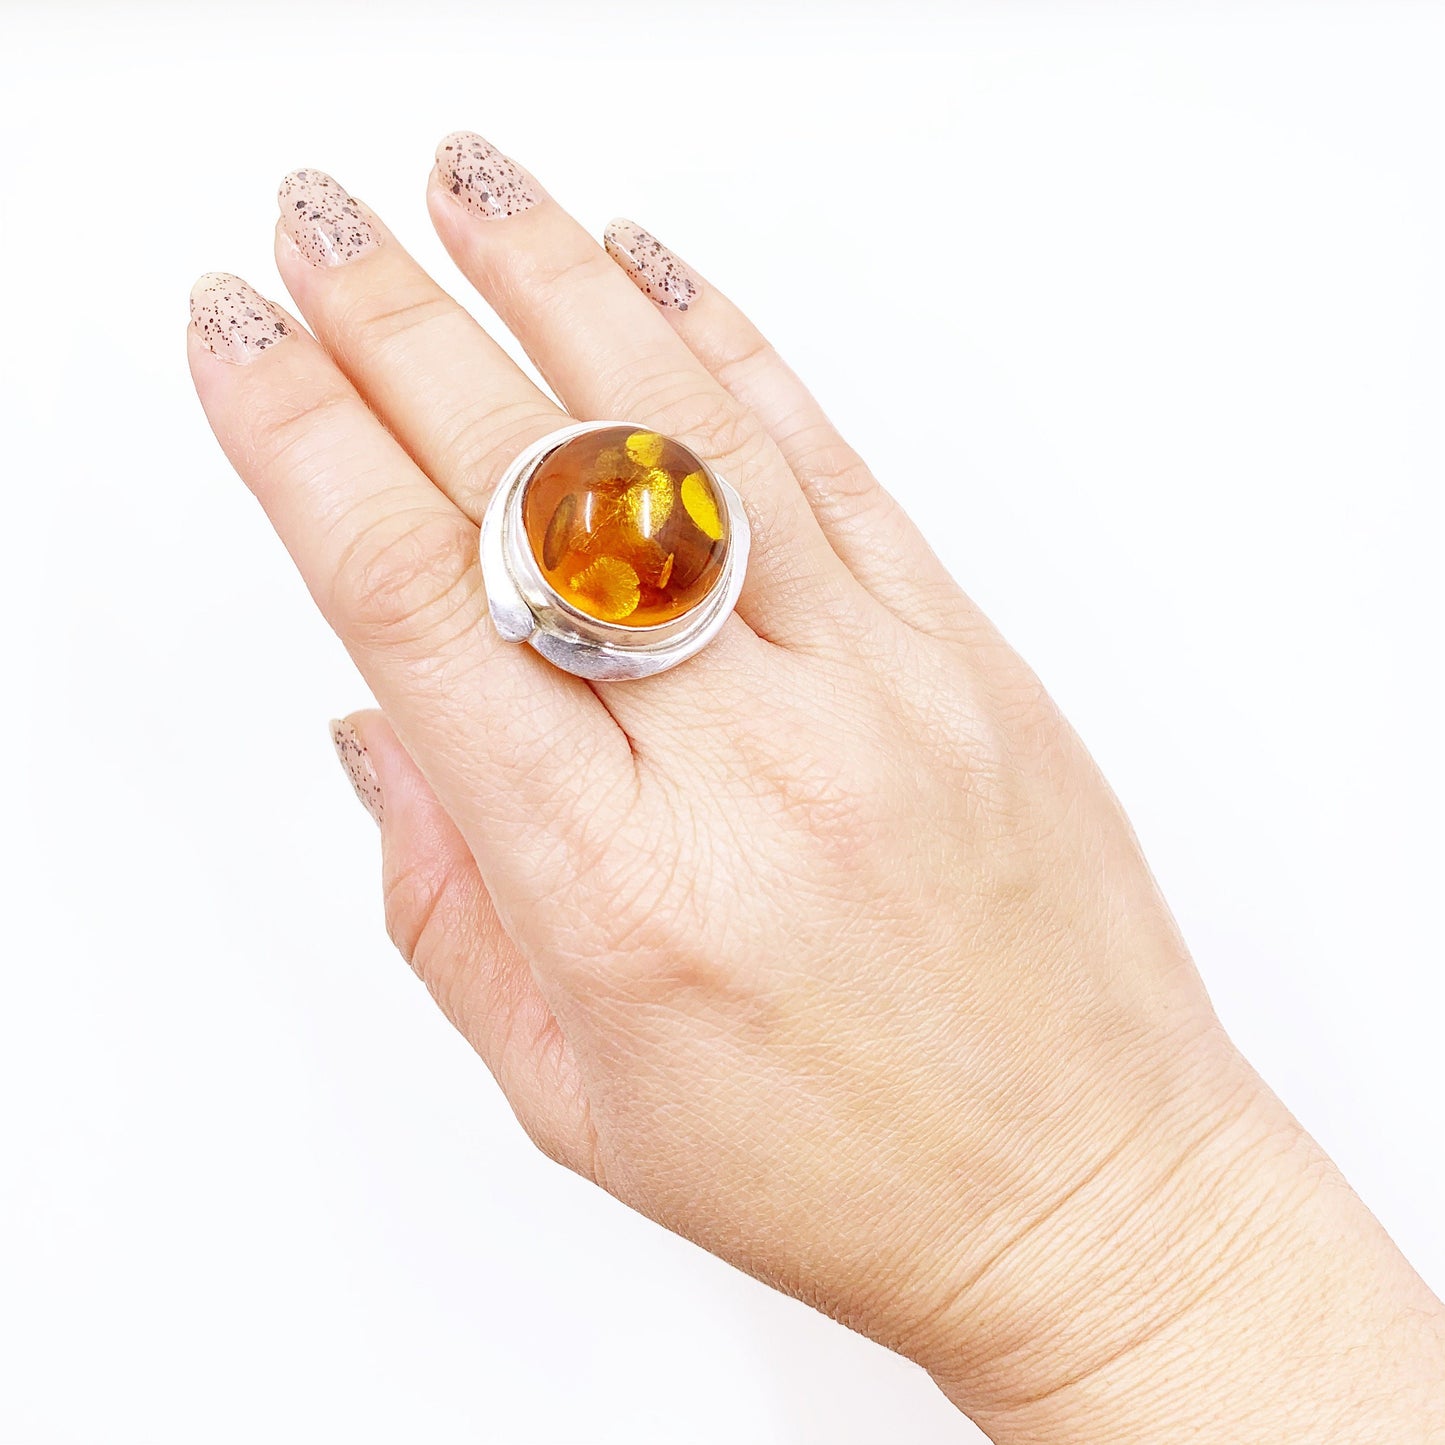 Vintage Silver Amber Ring | Large Amber Statement Ring | Size 6